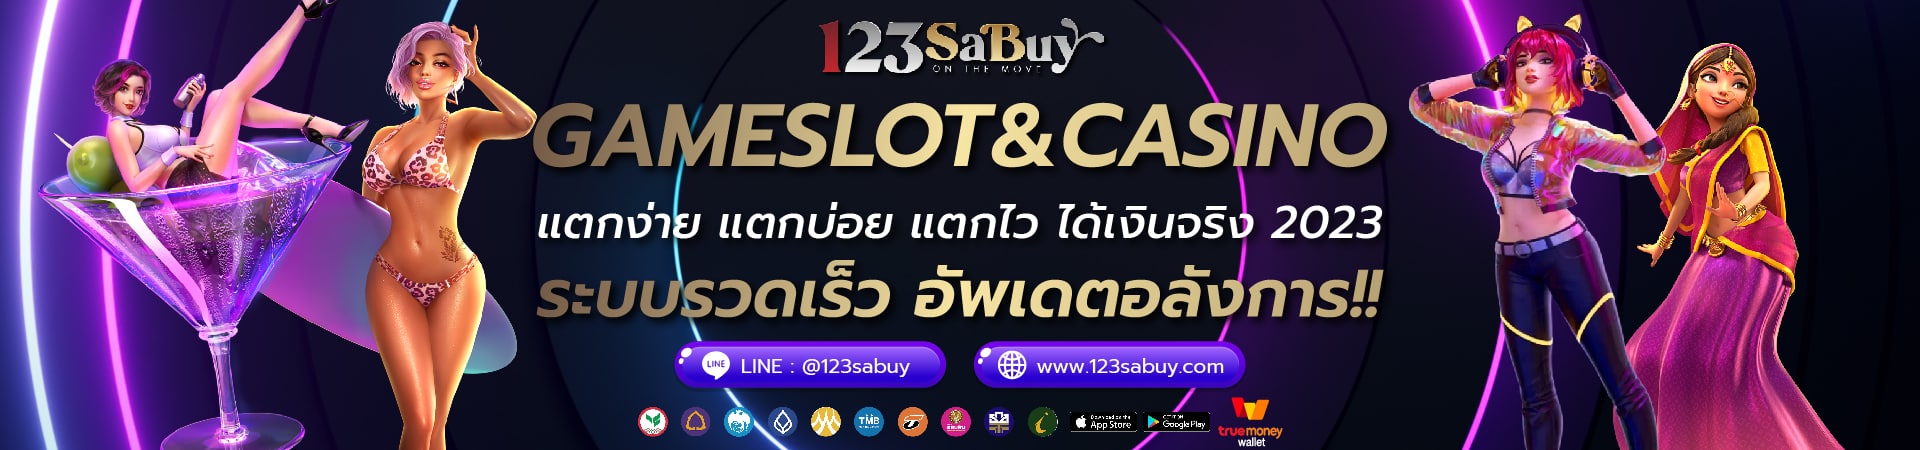 game slot and casino 123sabuy